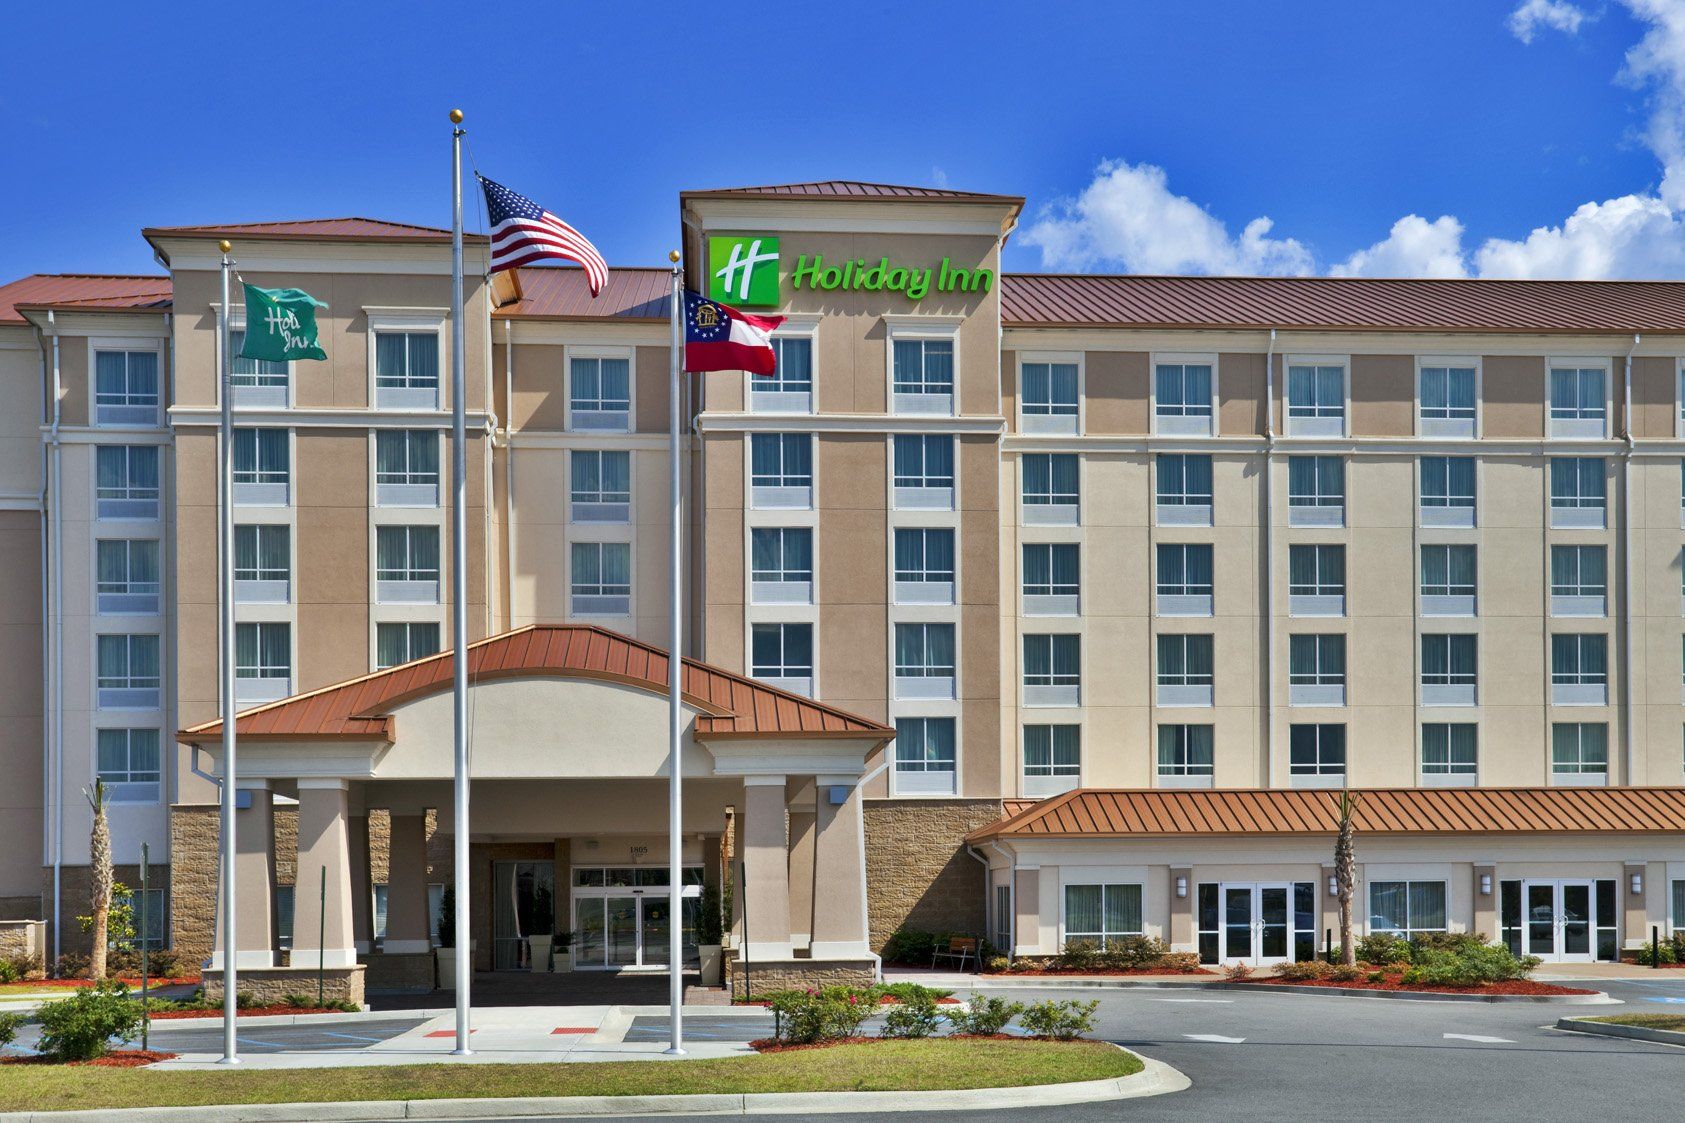 Multi-story Holiday Inn and Conference Center in Valdosta, GA.